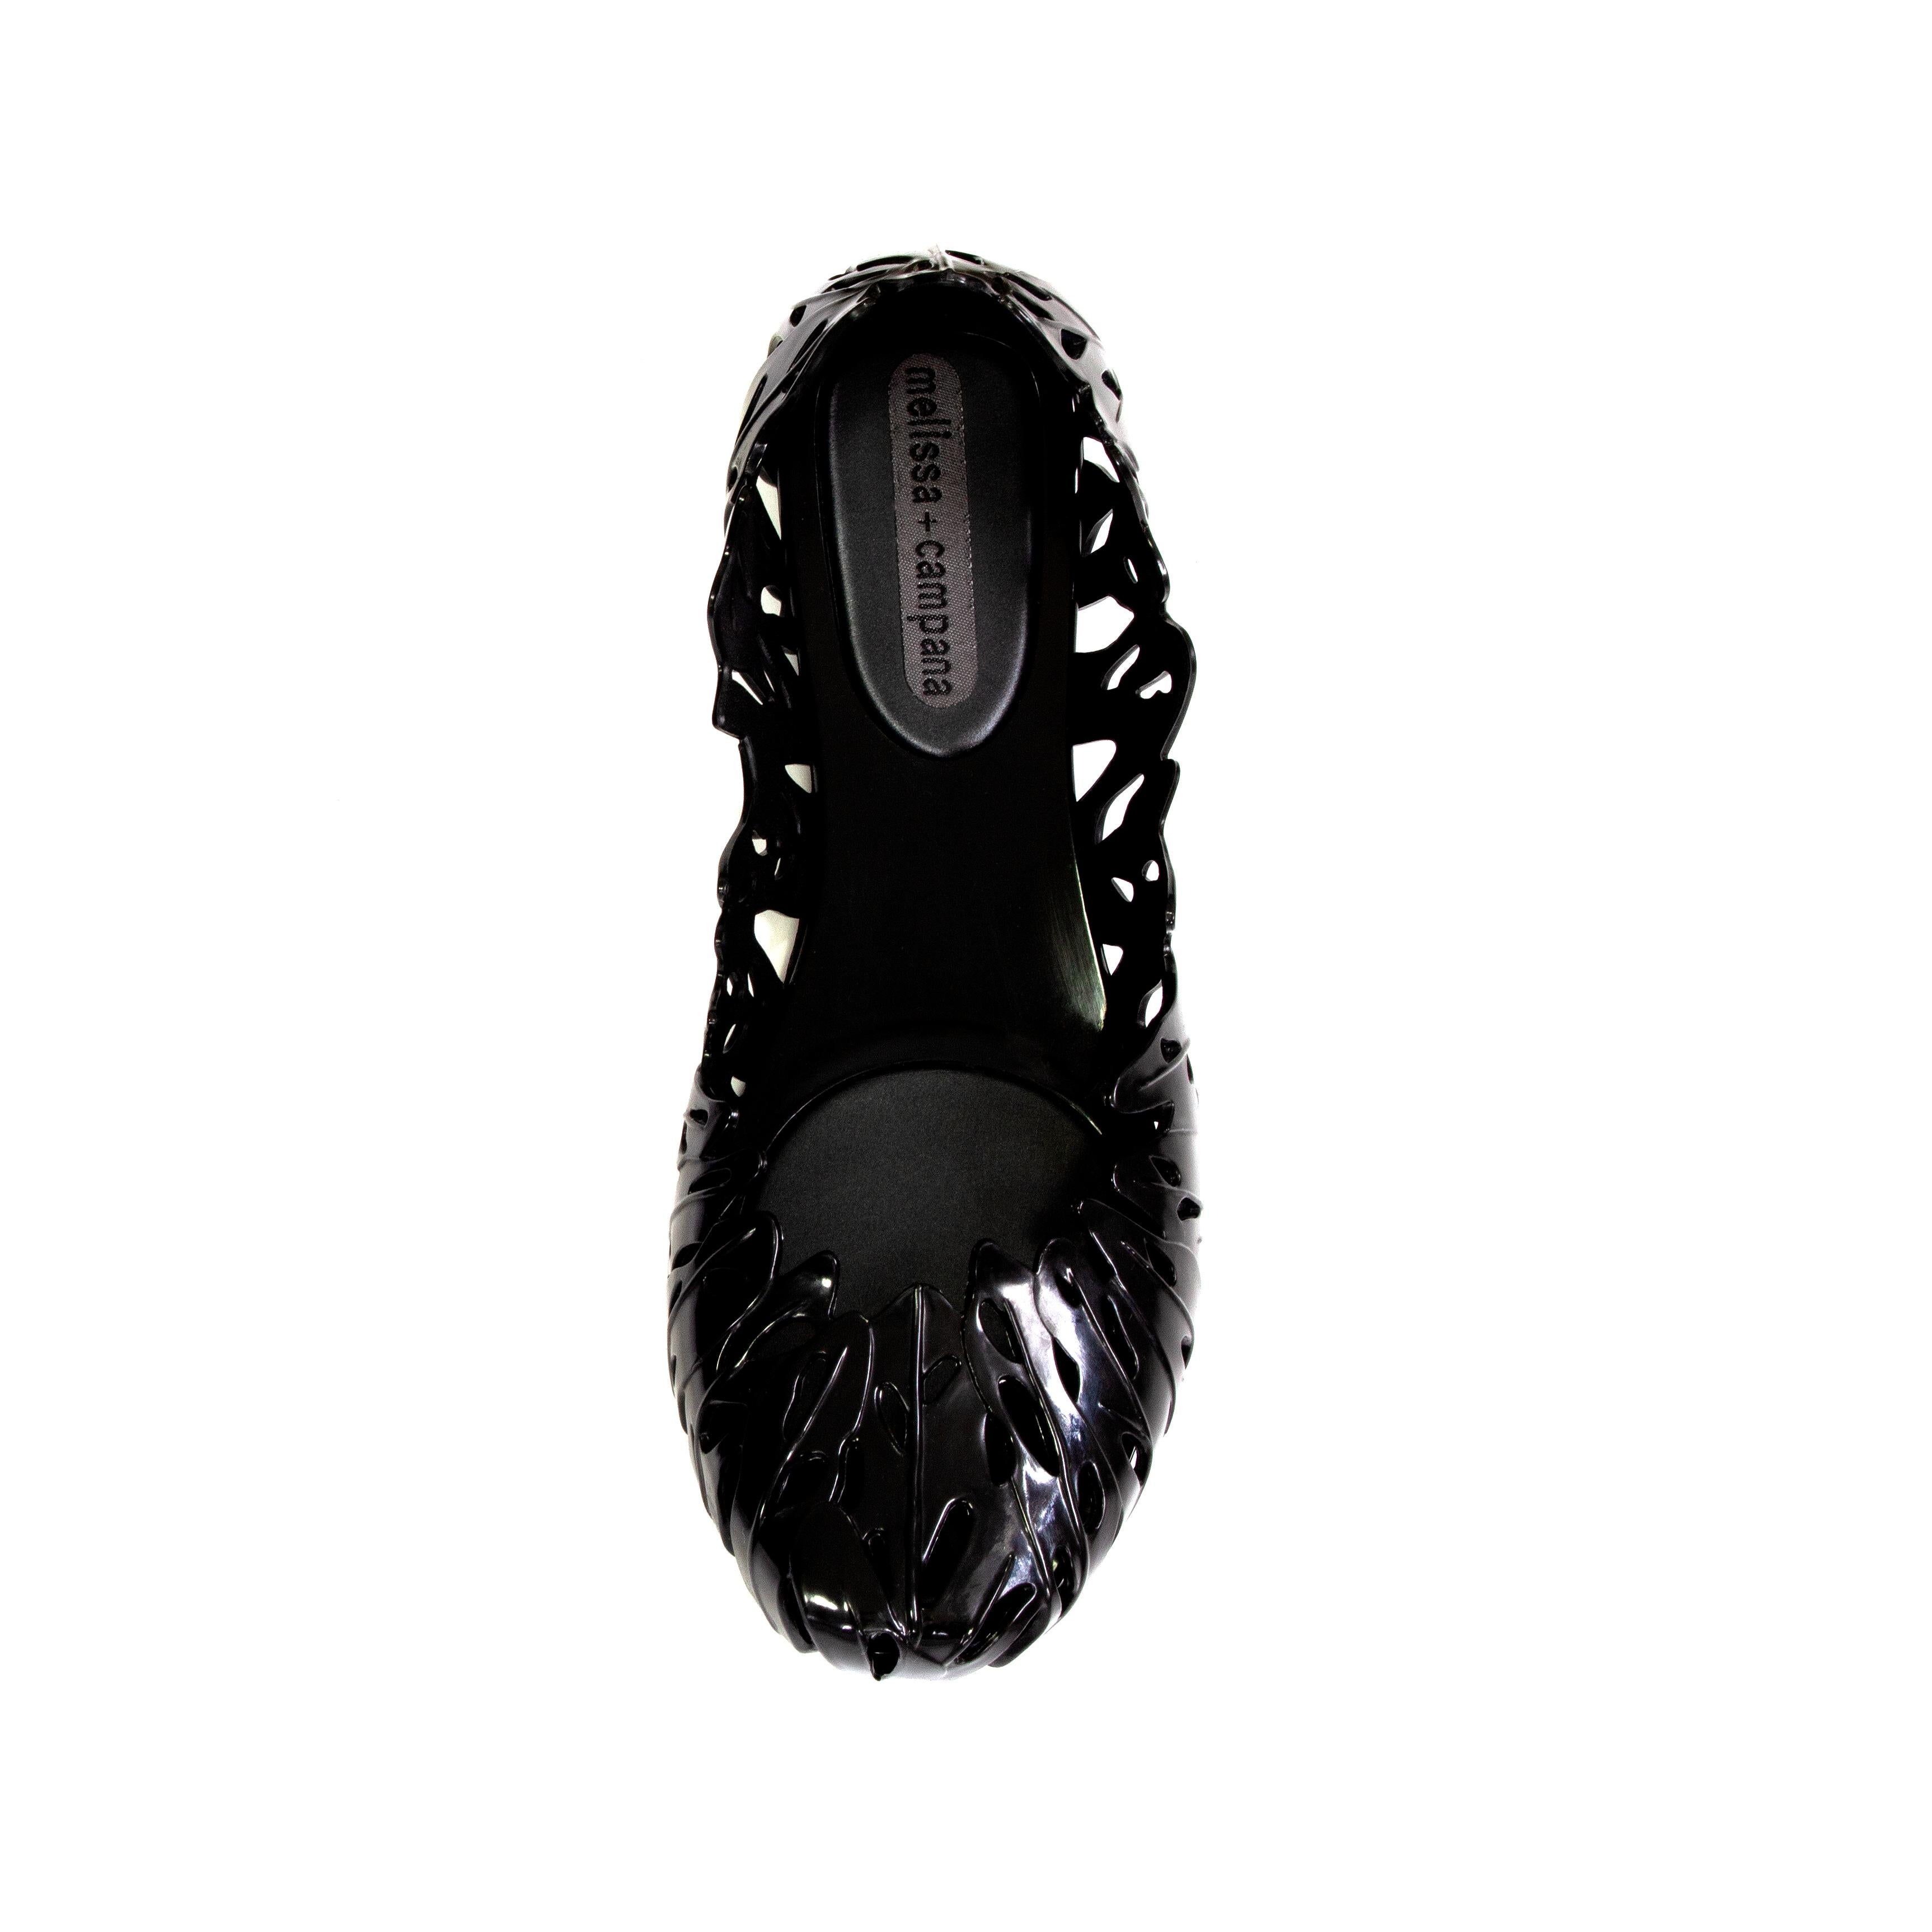 Product Details: Melissa Campana - Costela De Adao - Black Gloss - Cut-Out Rubber Pumps - Shoes - Flats 
Label: Melissa Campana 
Fabric Content: Black Gloss / Cut-Out Rubber
Size: 38 / UK 5
Max Shoe Width Across: 7.5 cm 
Shoe Length - Heel to Toe: